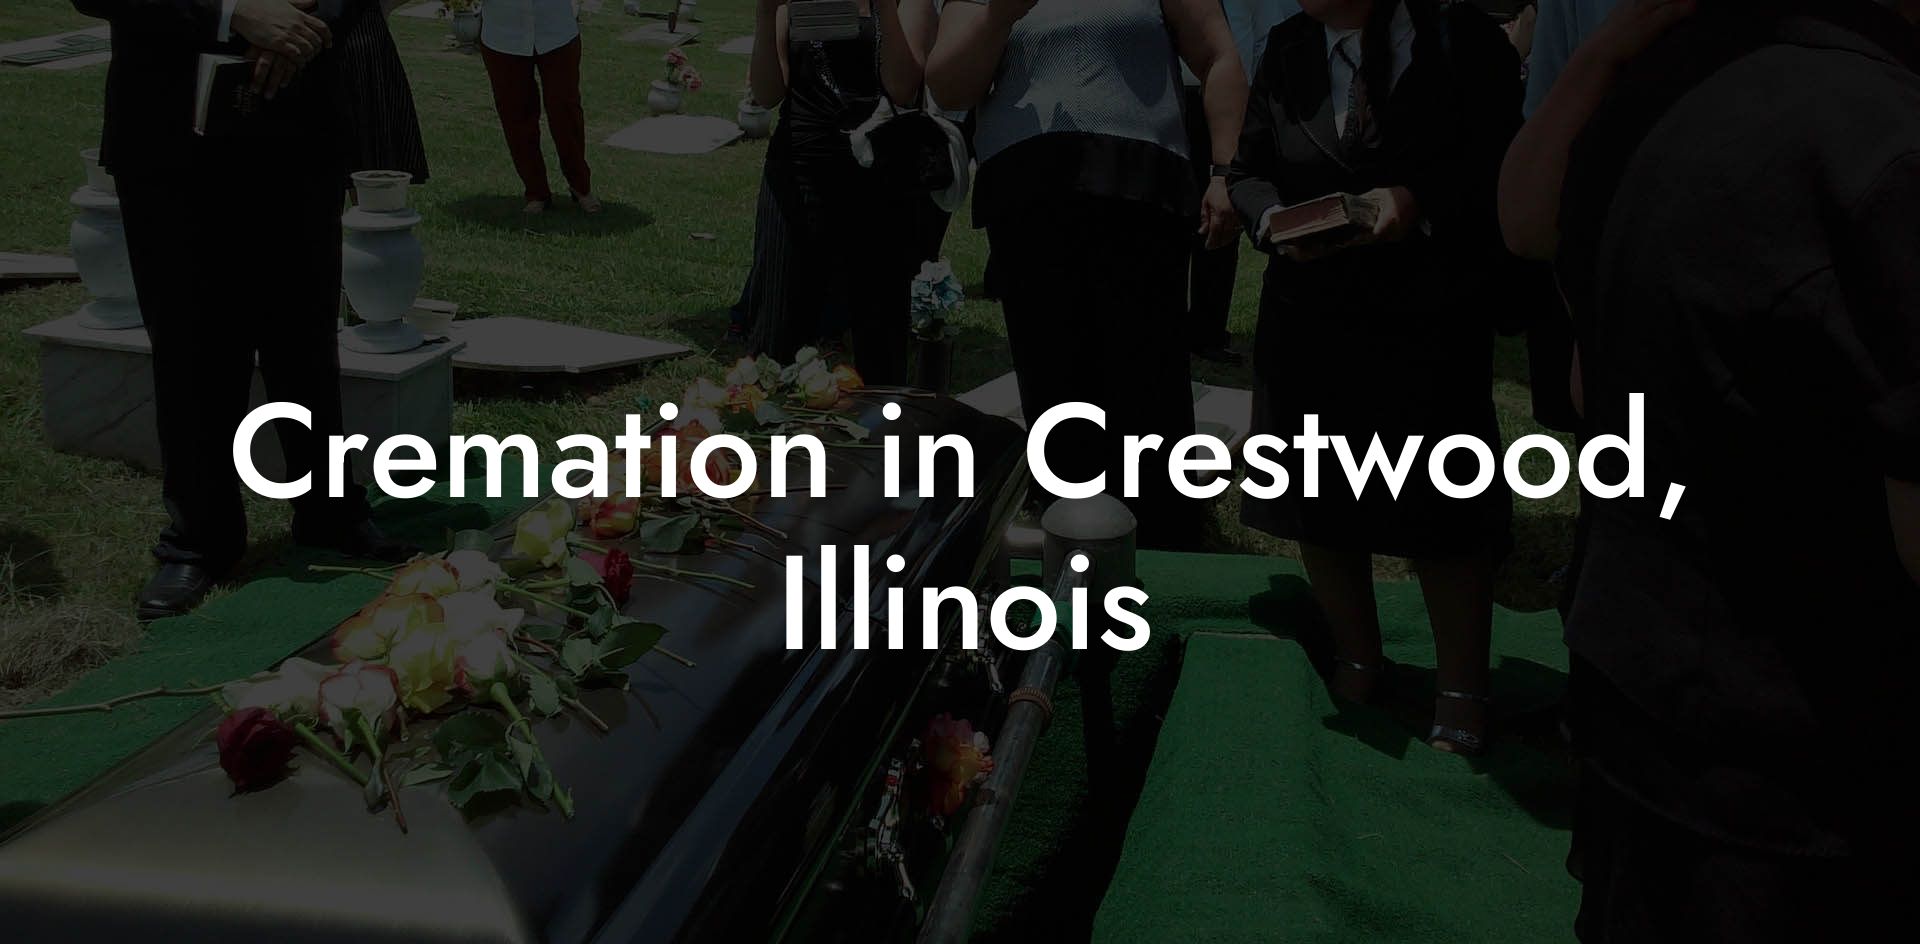 Cremation in Crestwood, Illinois